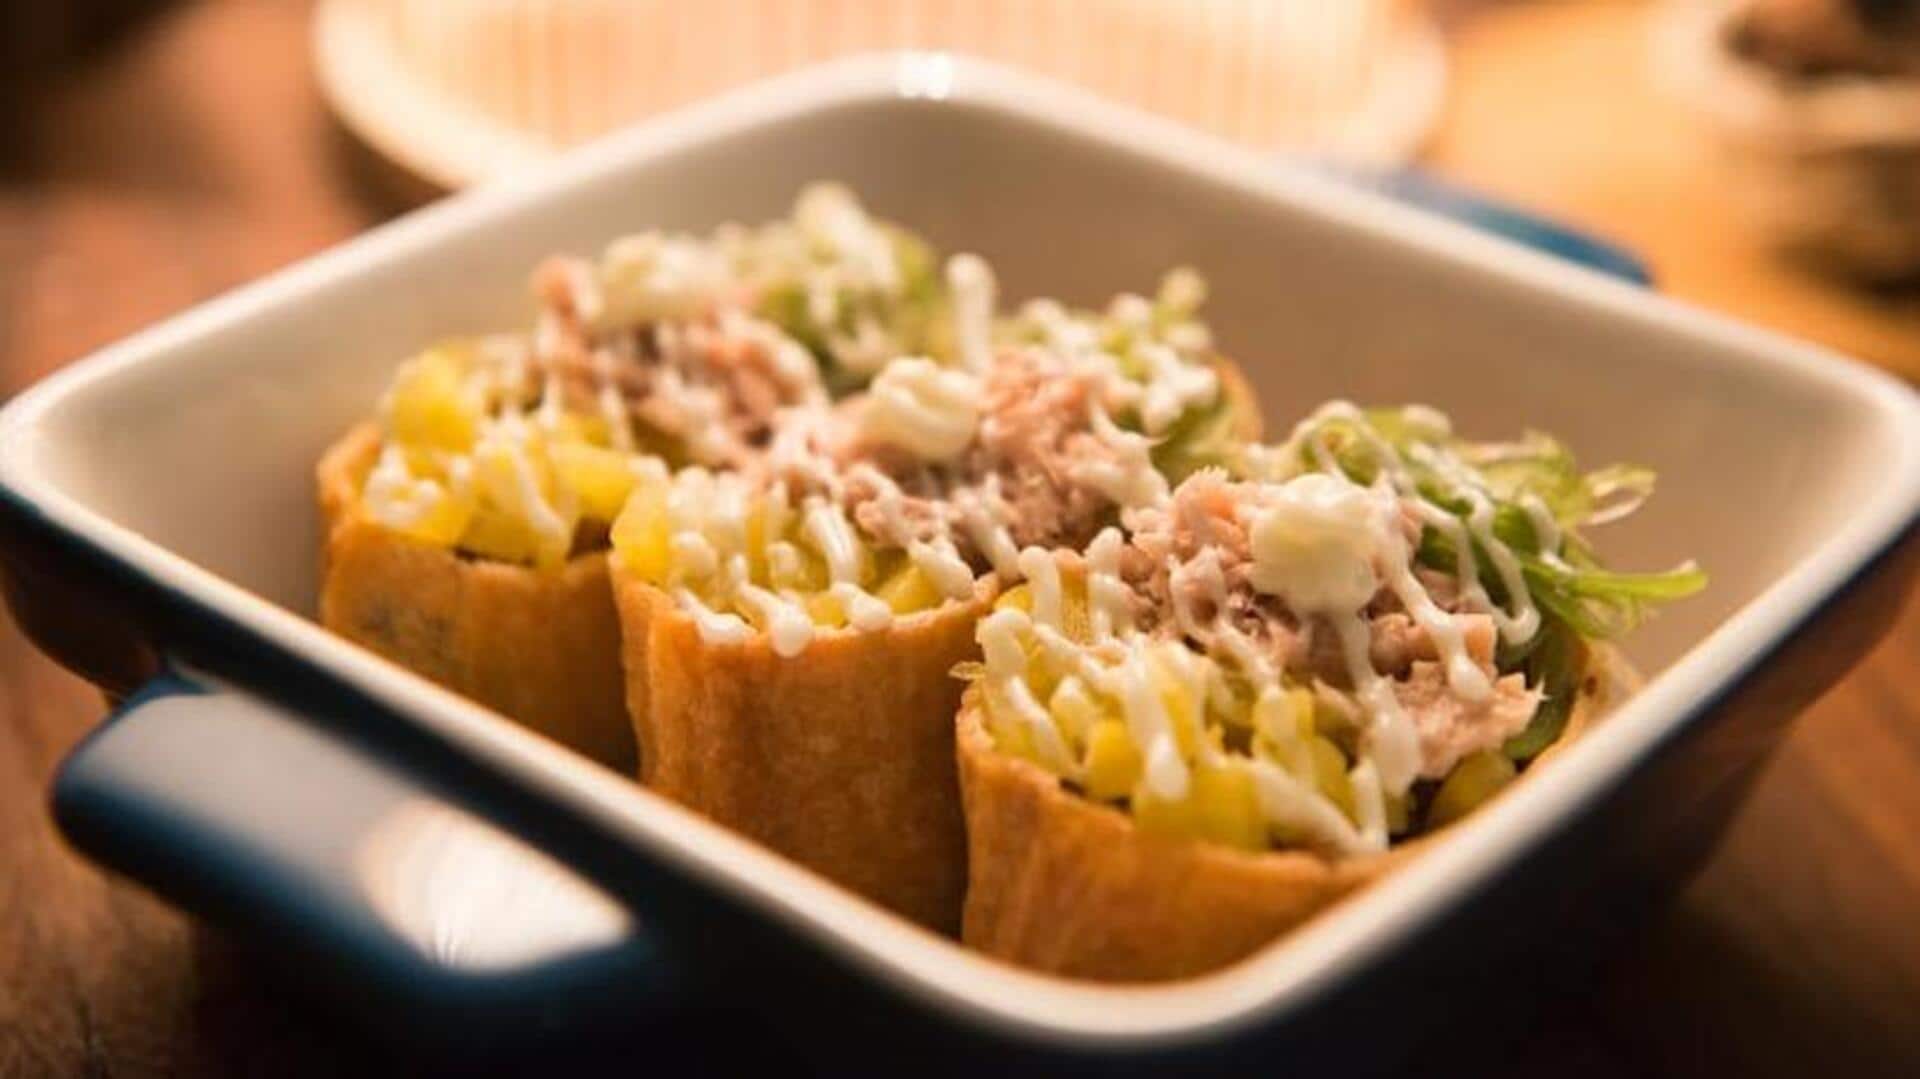 Prepare tempting Tex-Mex Jackfruit tacos with this recipe